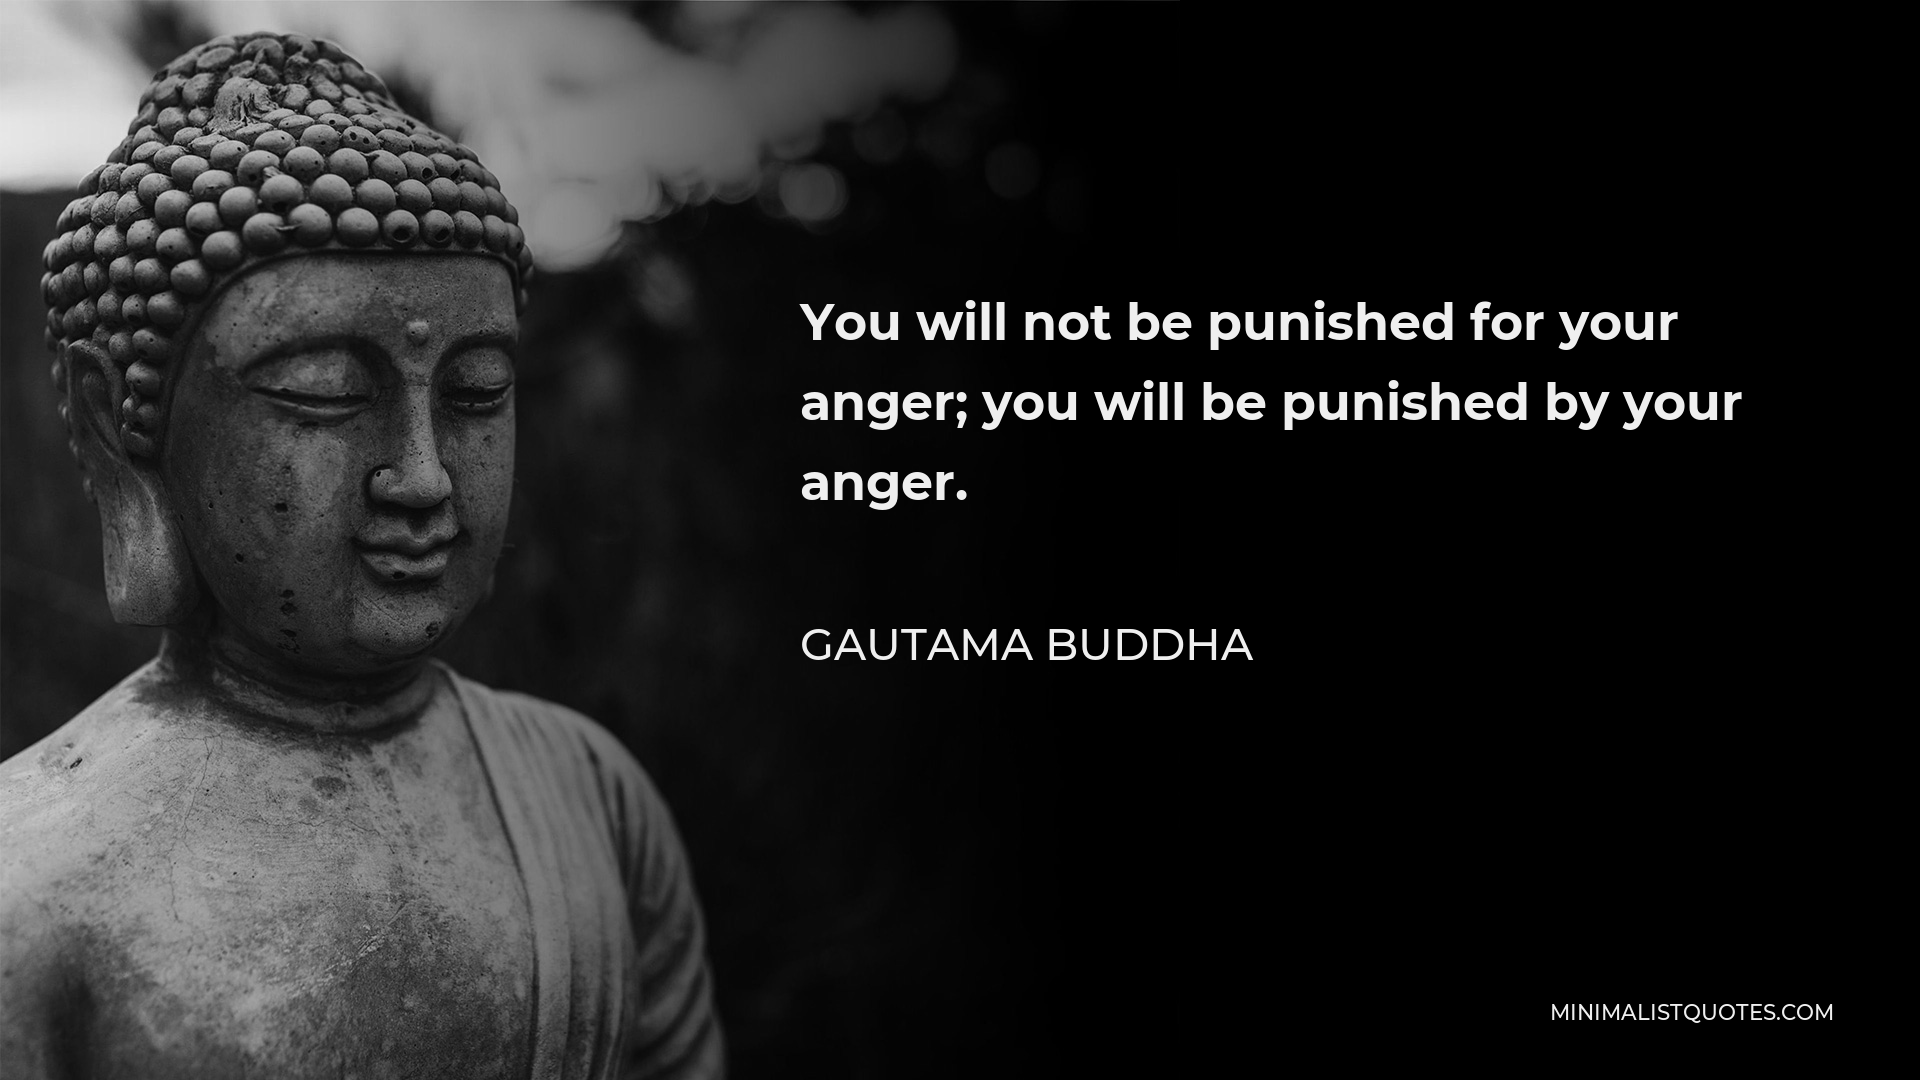 Gautama Buddha Quote - You will not be punished for your anger; you will be punished by your anger.